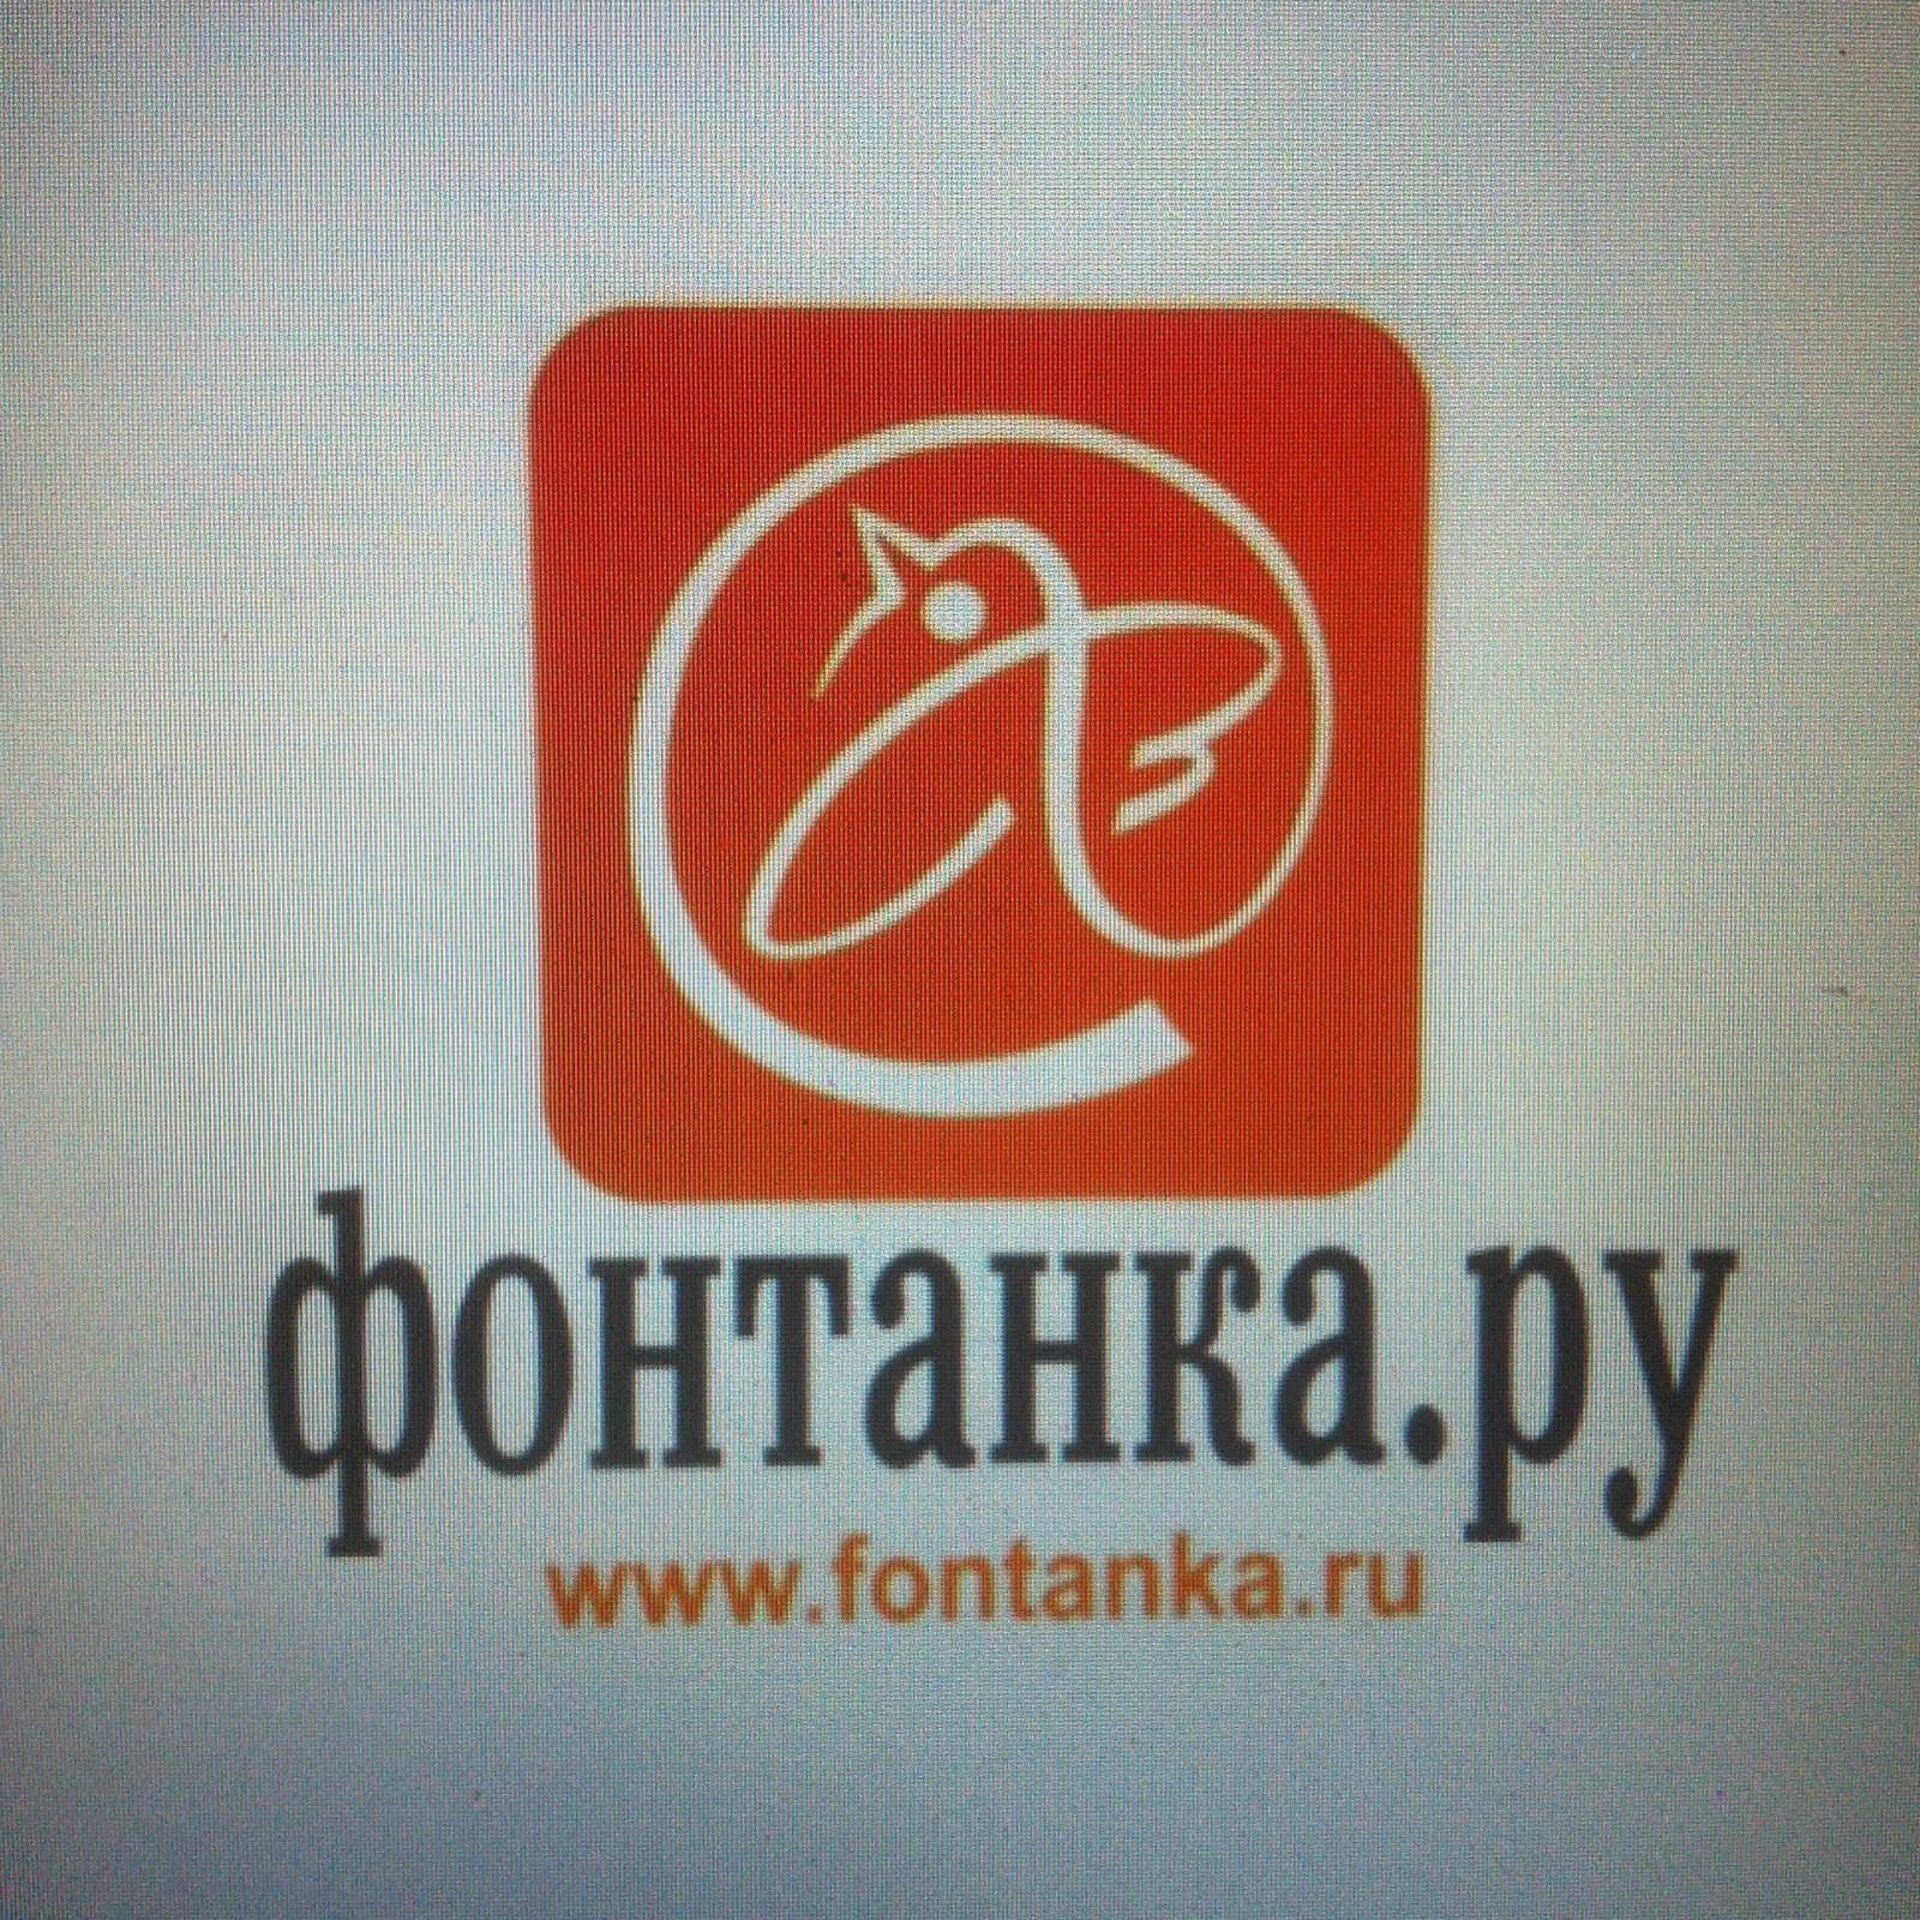 Сайт фонтанка ру. Фонтанка ру. Фонтанка ру логотип. Фонтанка логотип PNG. Фонтанка логотип без фона.